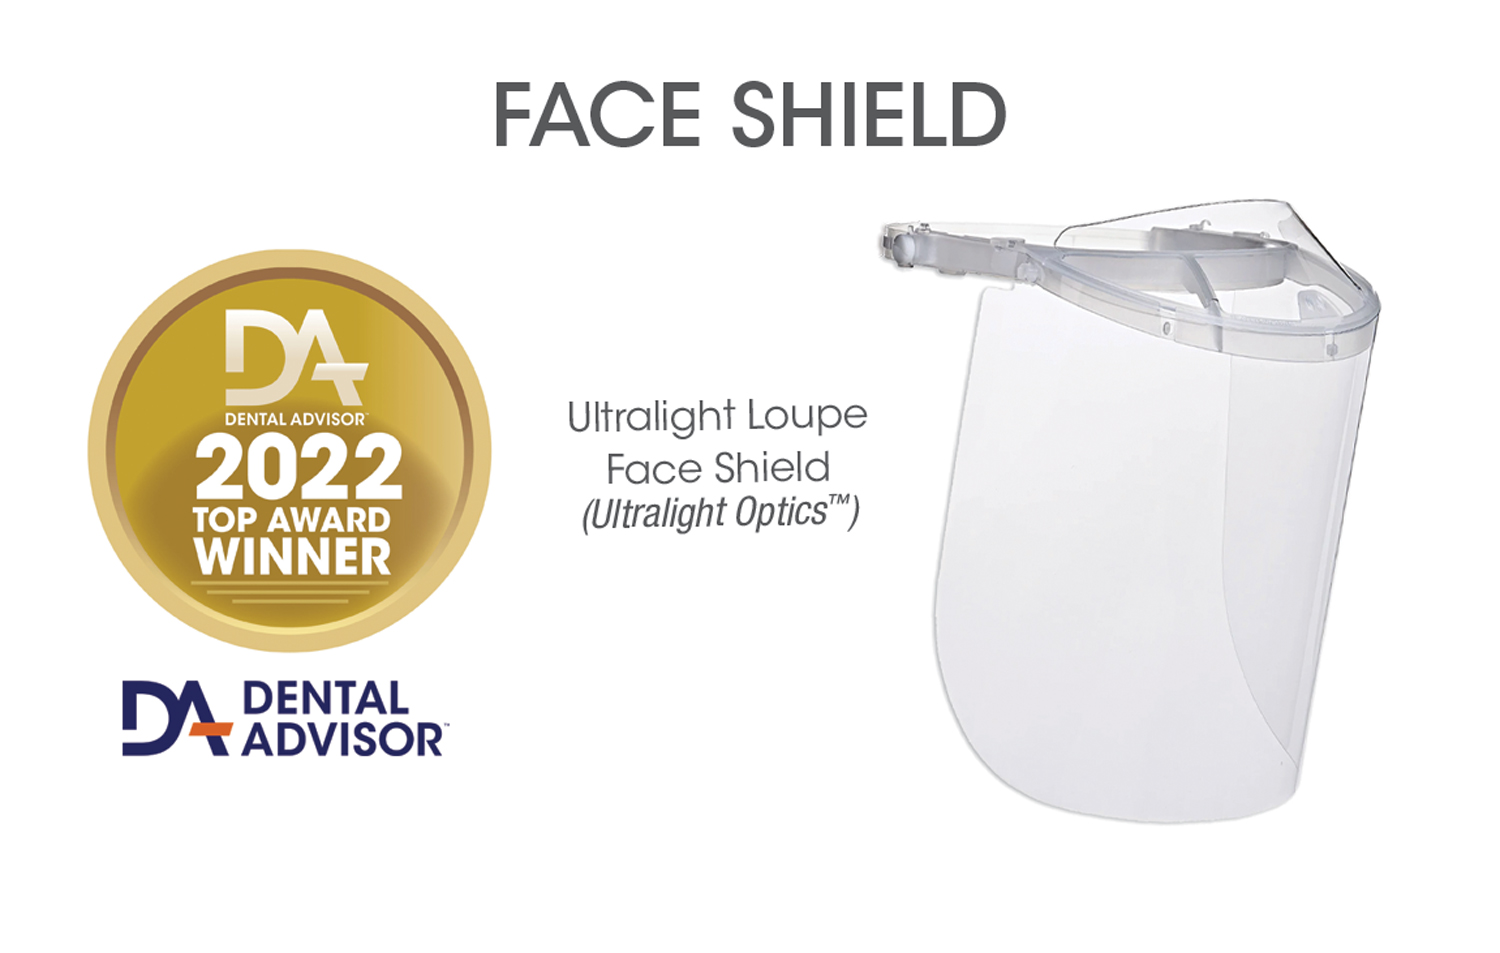 Ultralight Loupe Face Shield